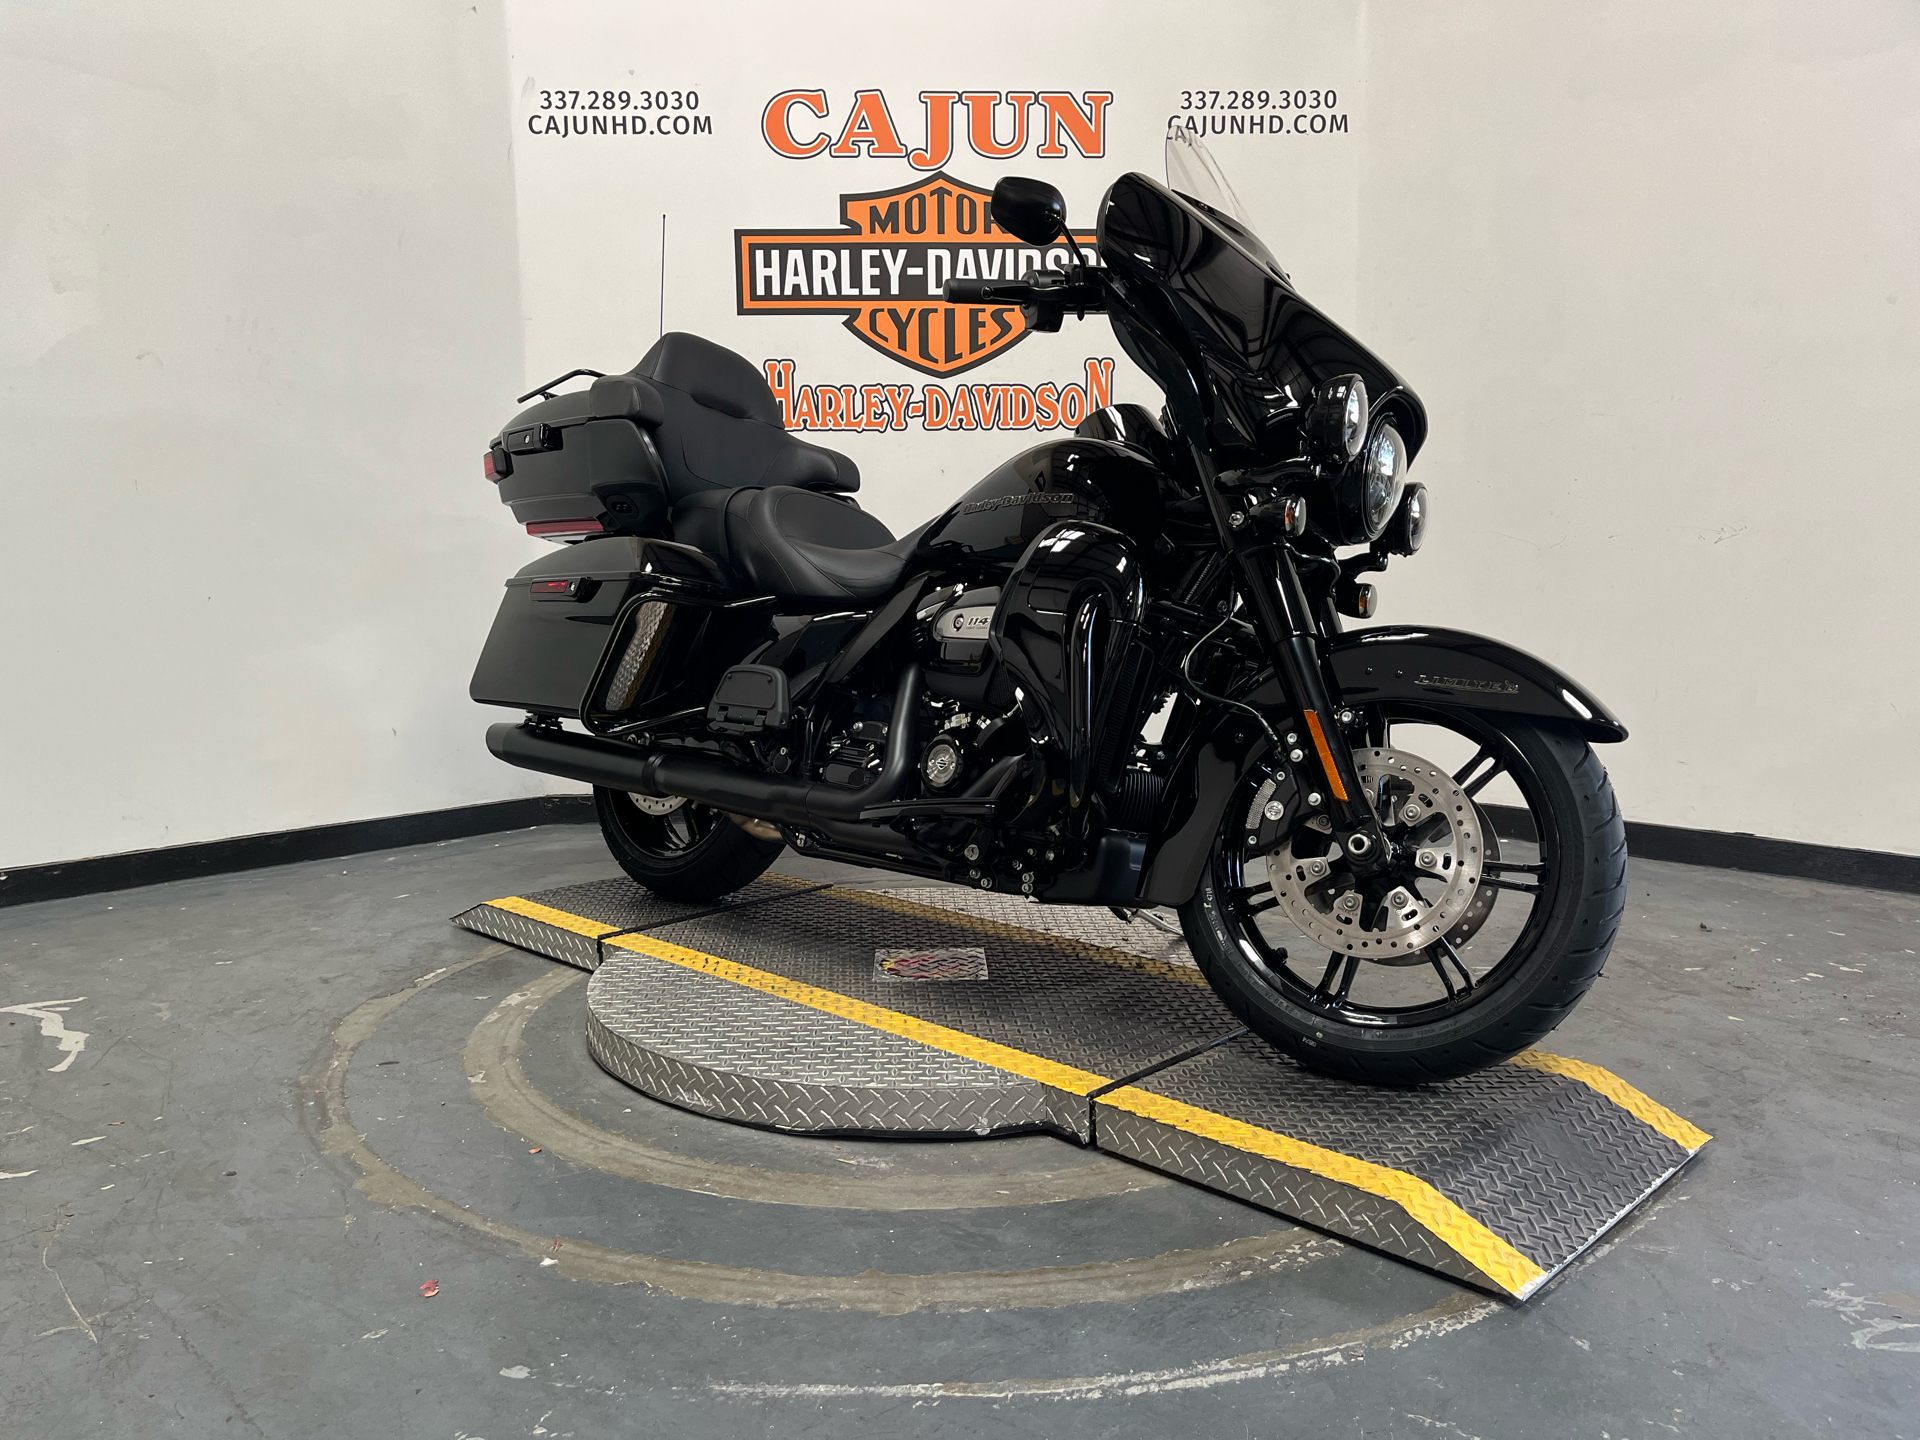 2022 Harley-Davidson Ultra Limited in Scott, Louisiana - Photo 4